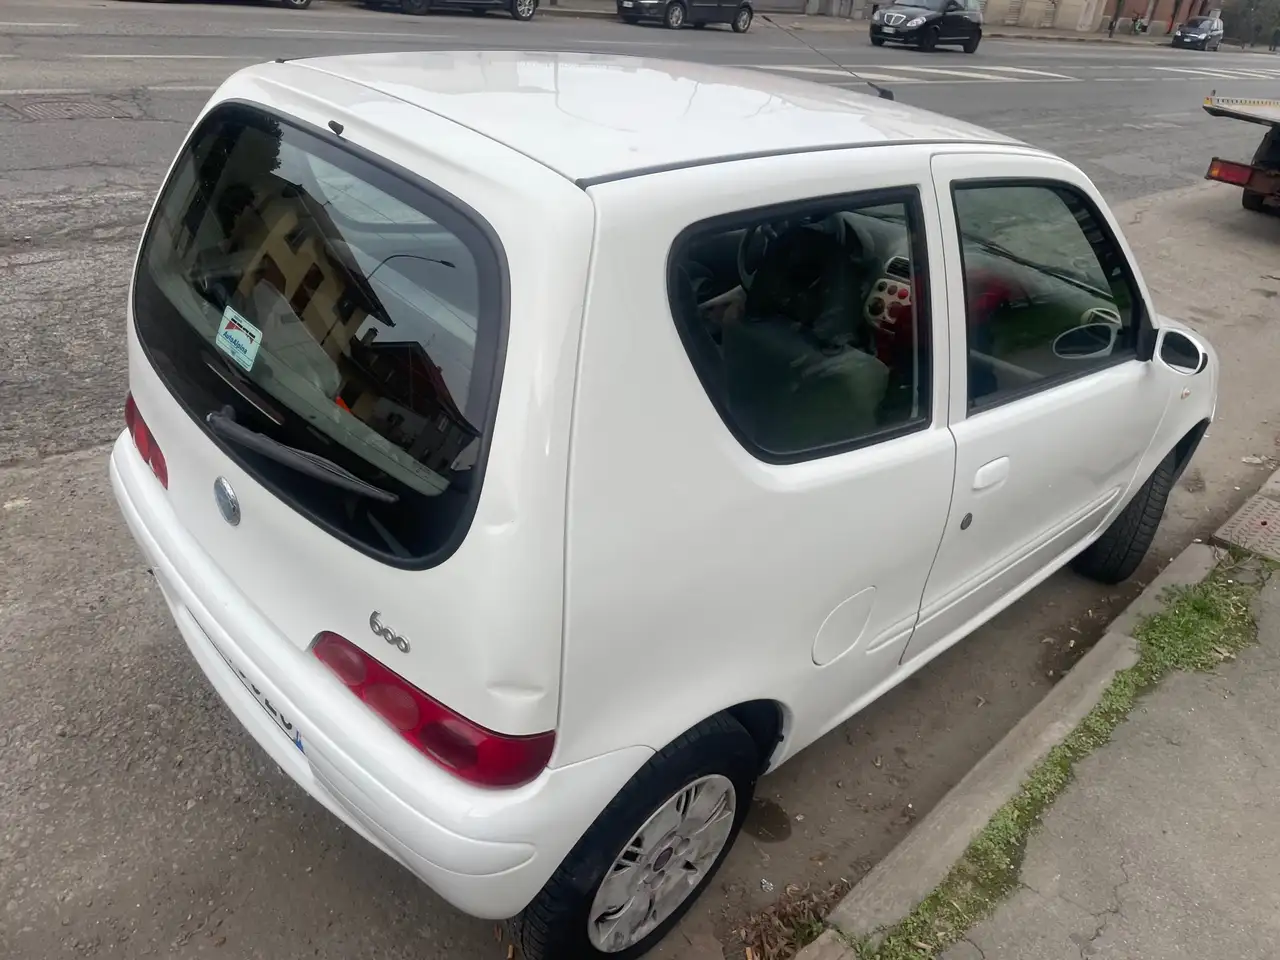 usato Fiat 600 City car a Torino TO per € 2.900,-